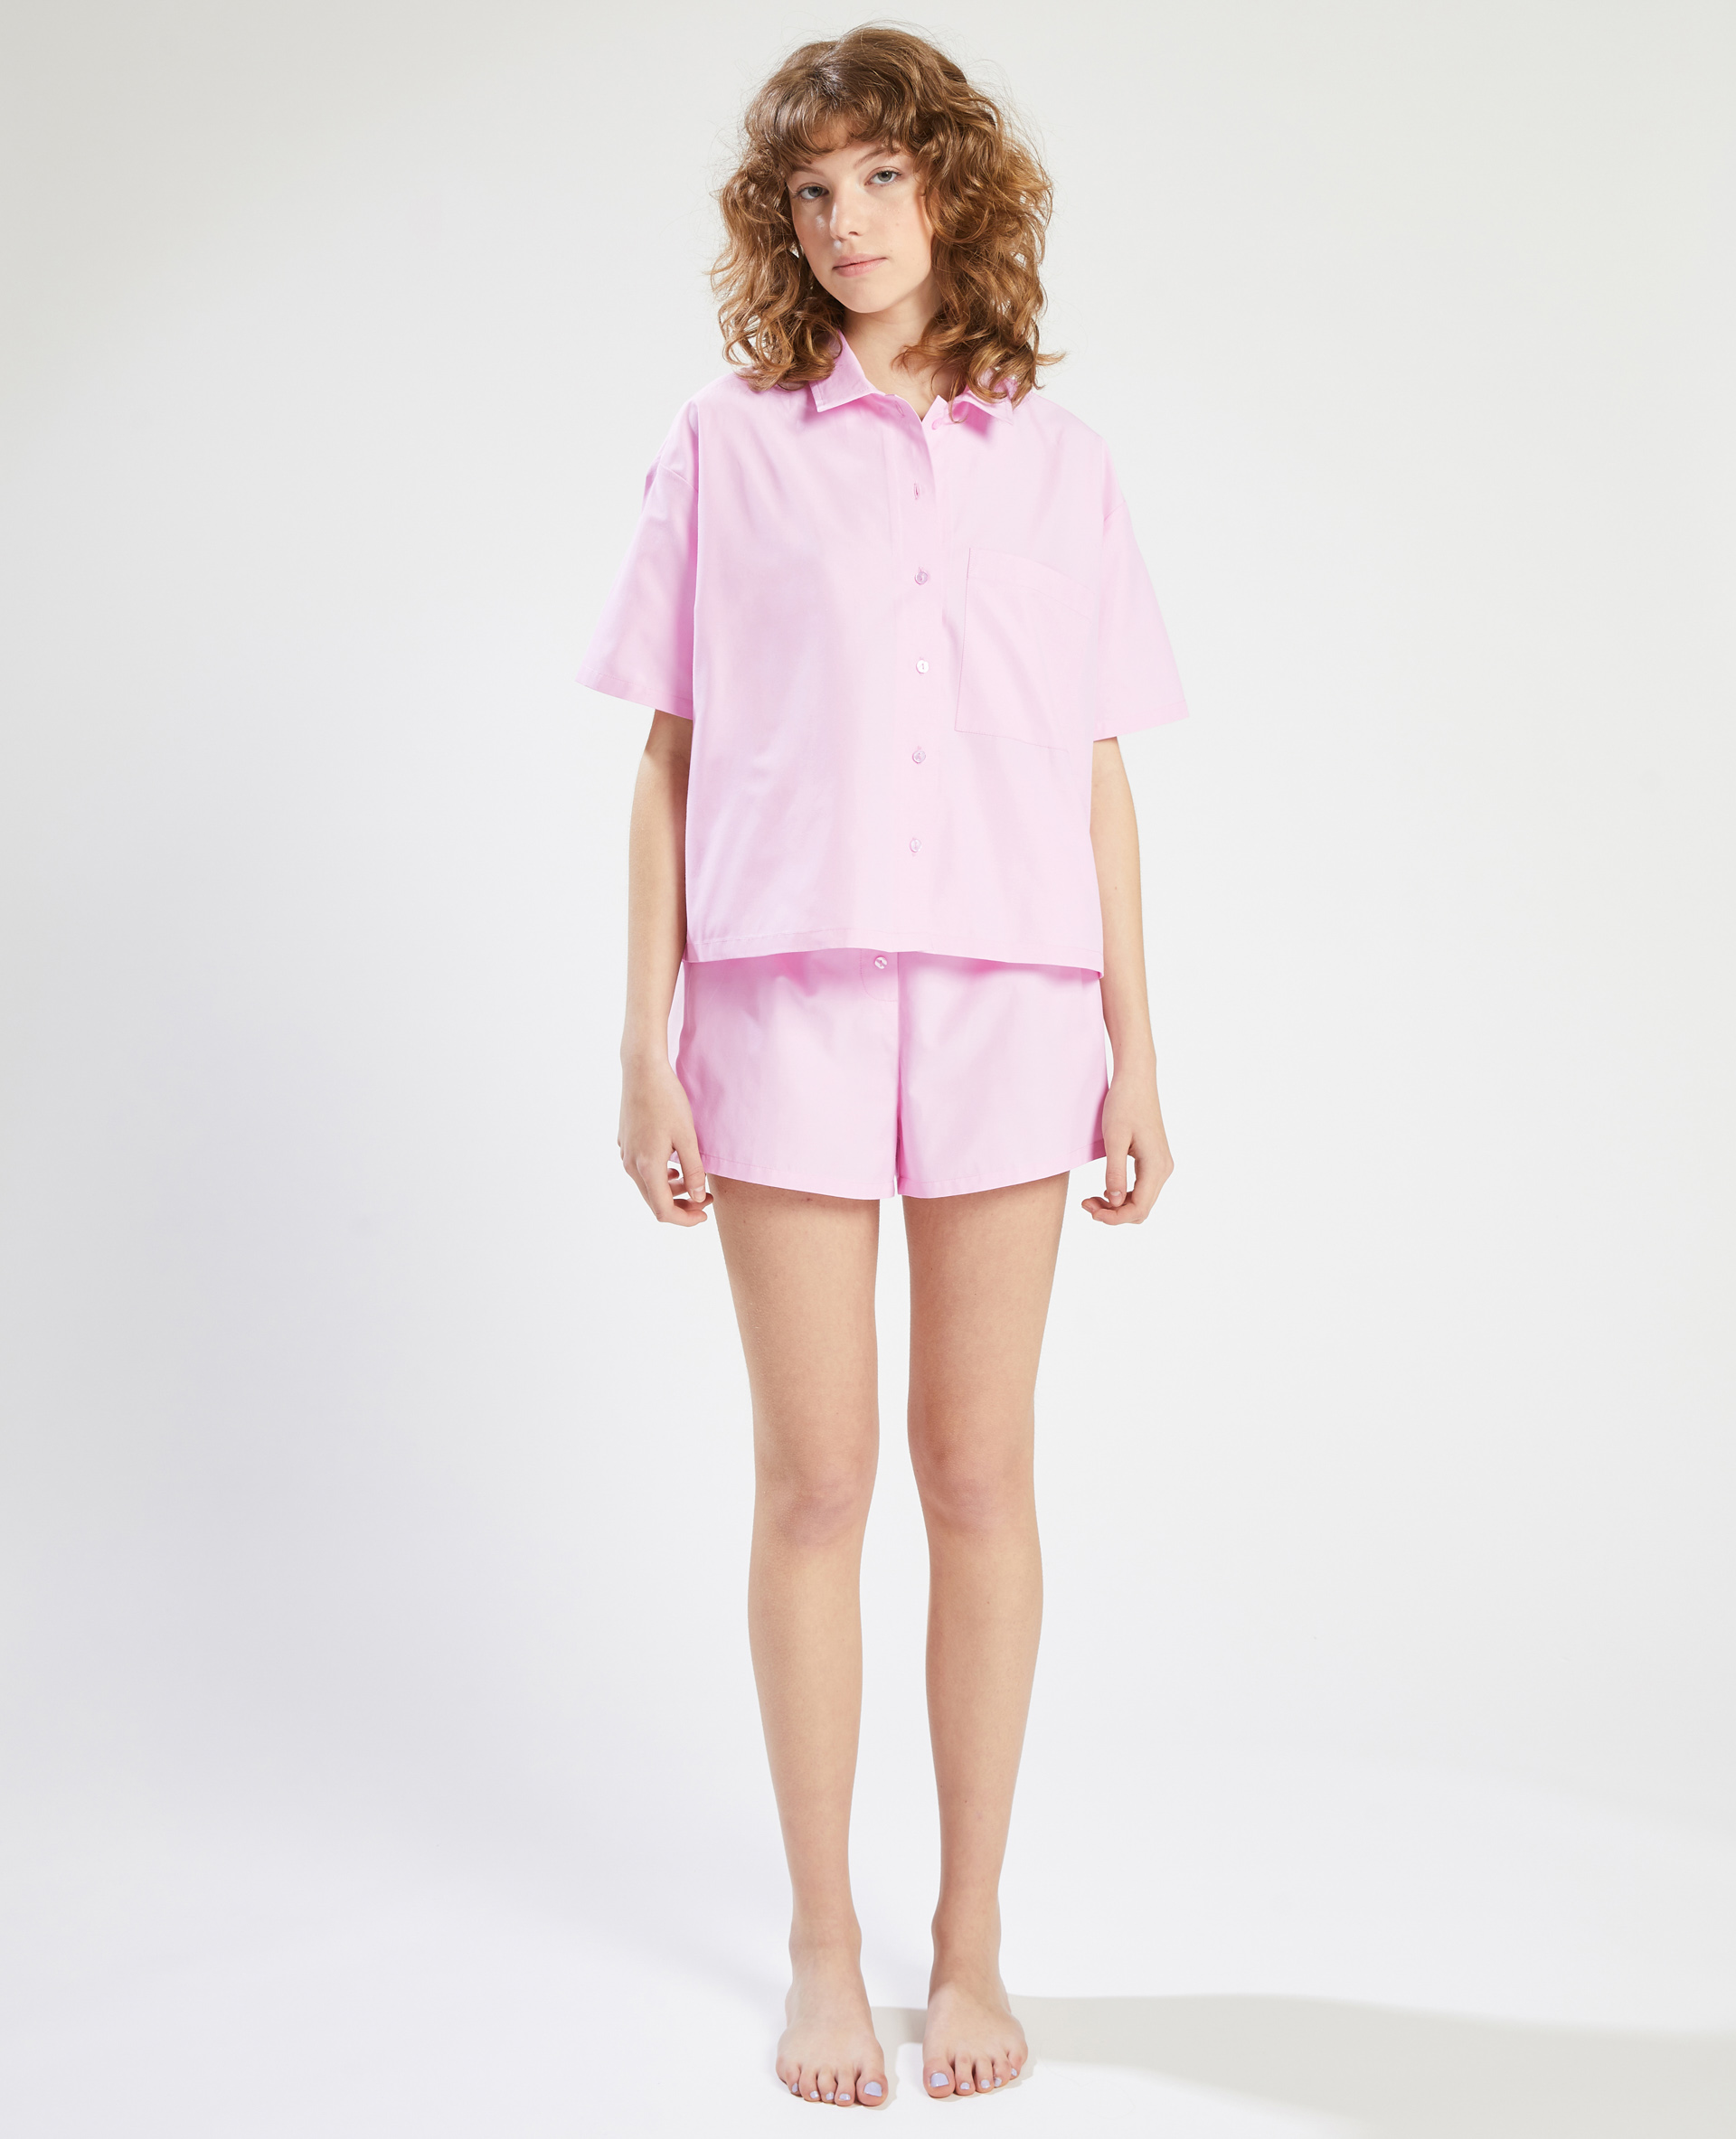 Chemise pyjama rose pastel - Pimkie